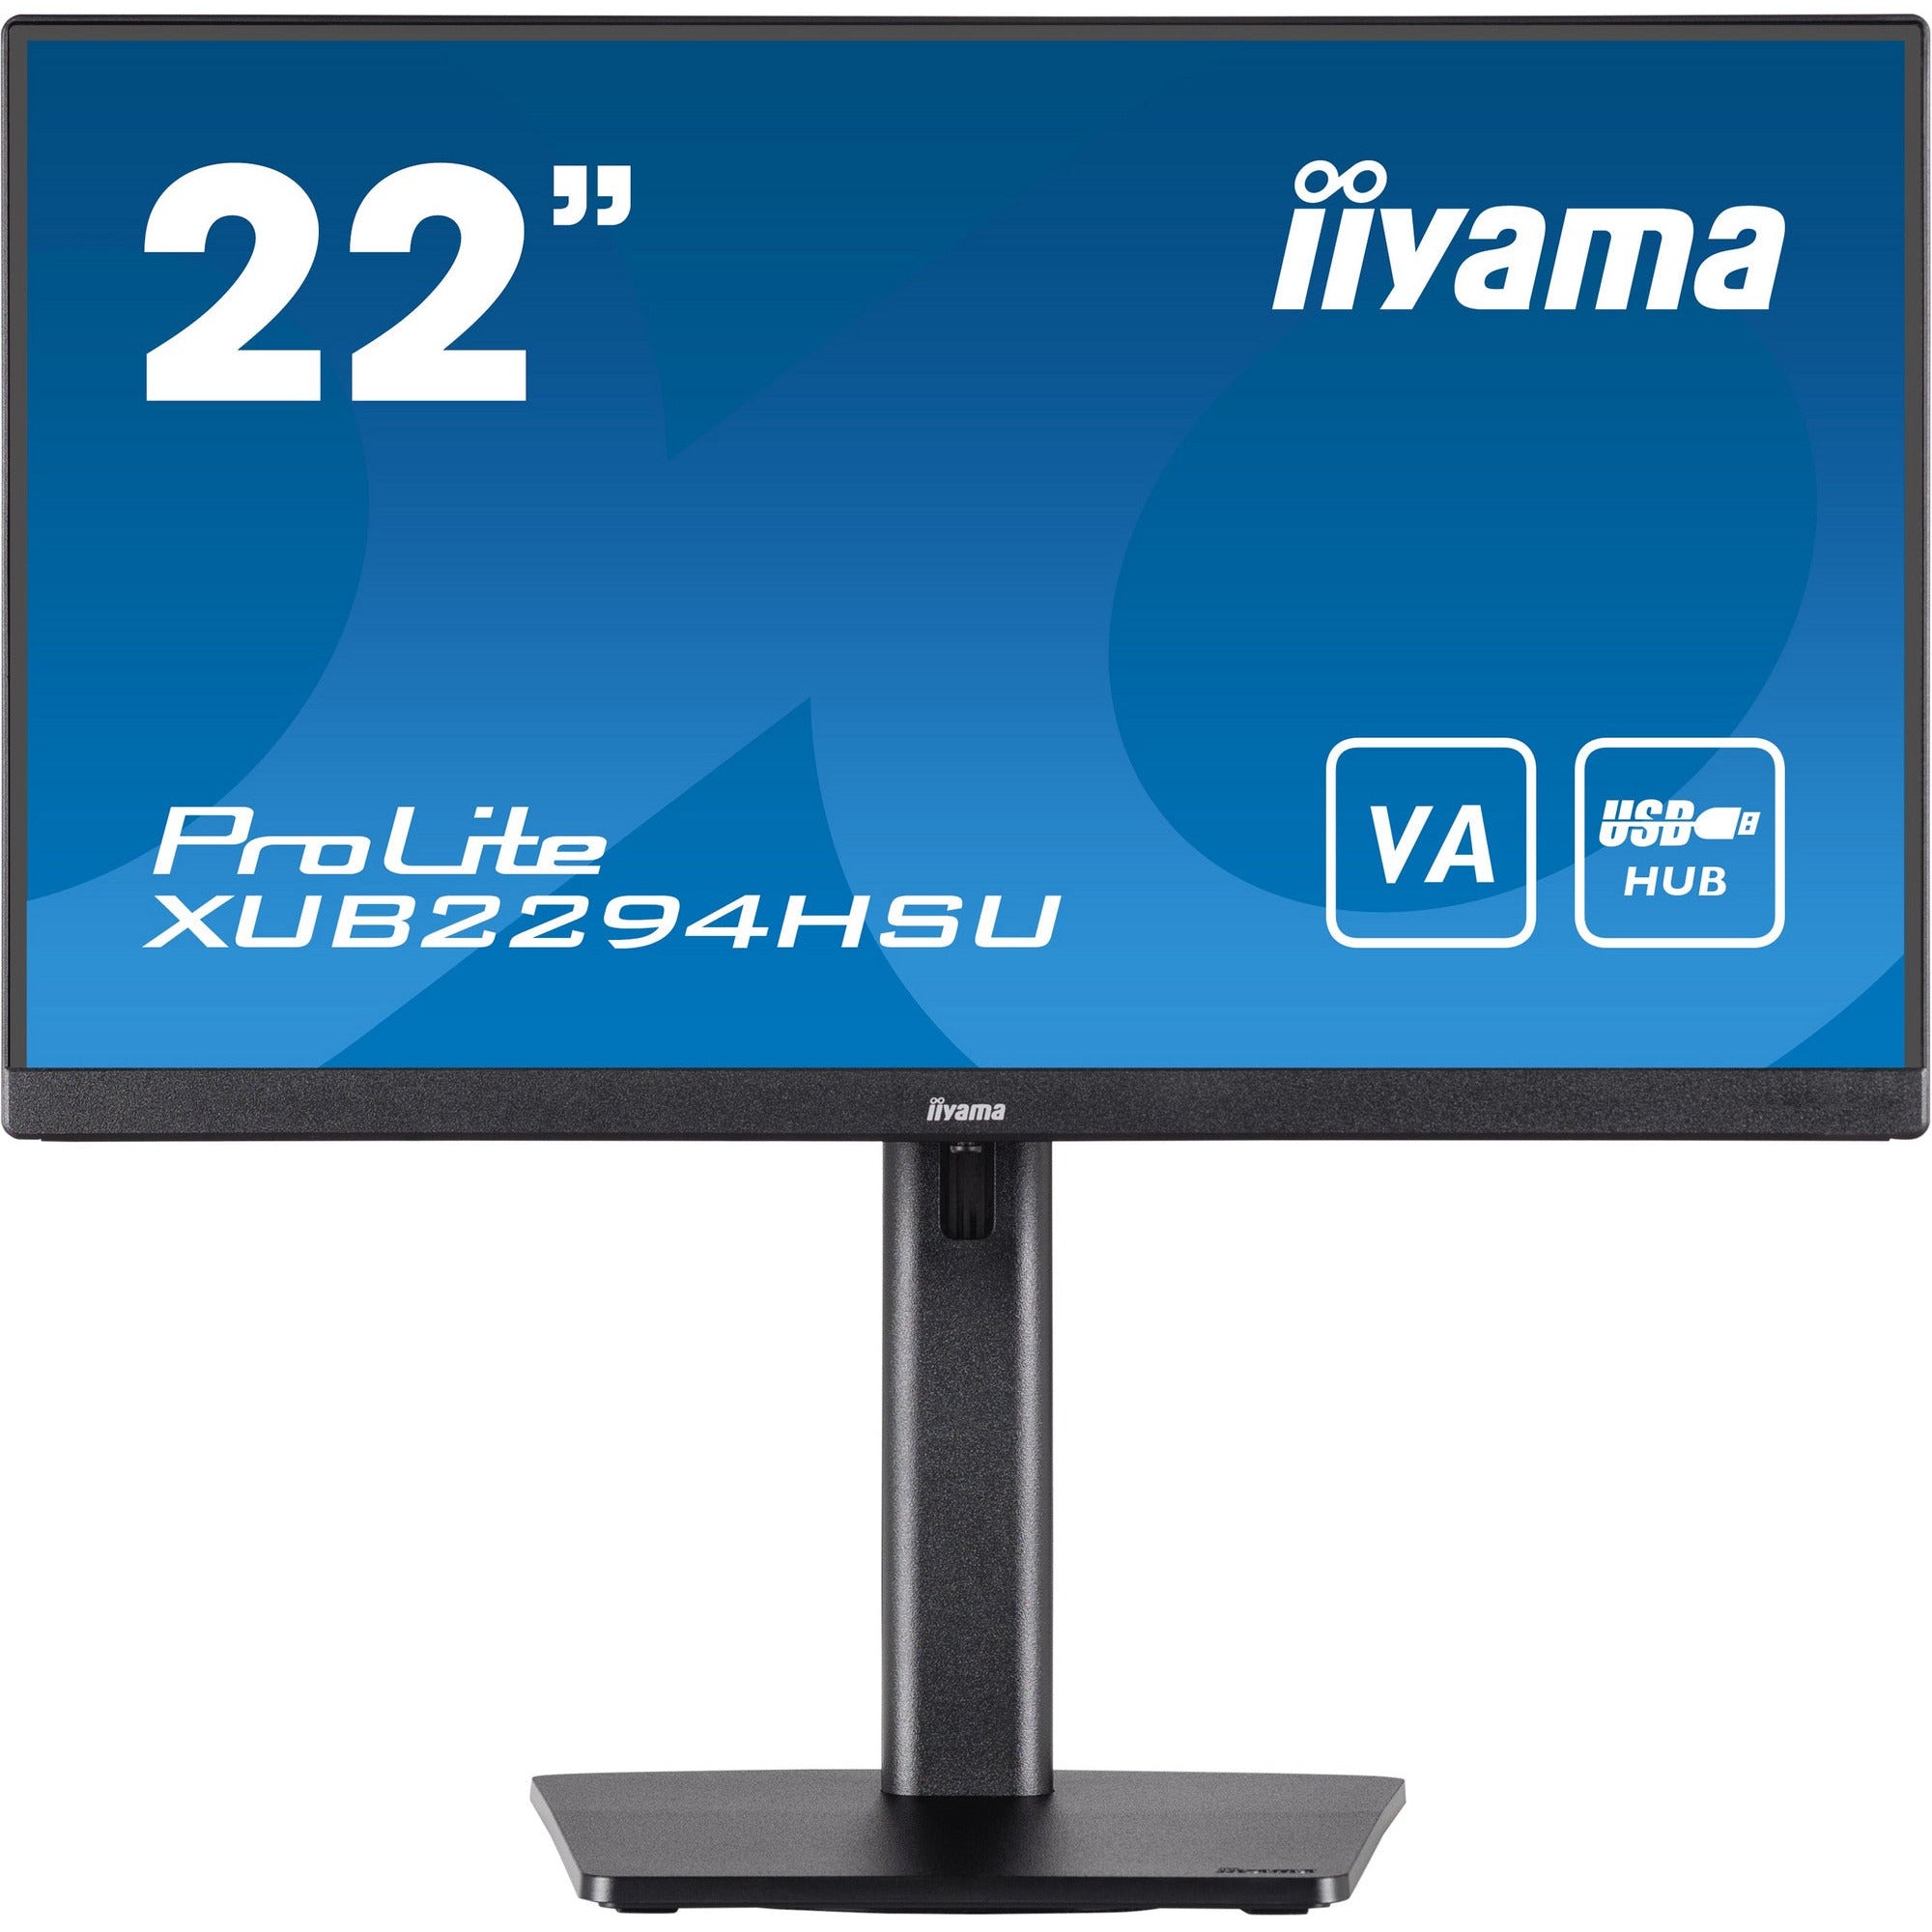 iiyama ProLite XUB2294HSU-B2 22" LCD HD Monitor